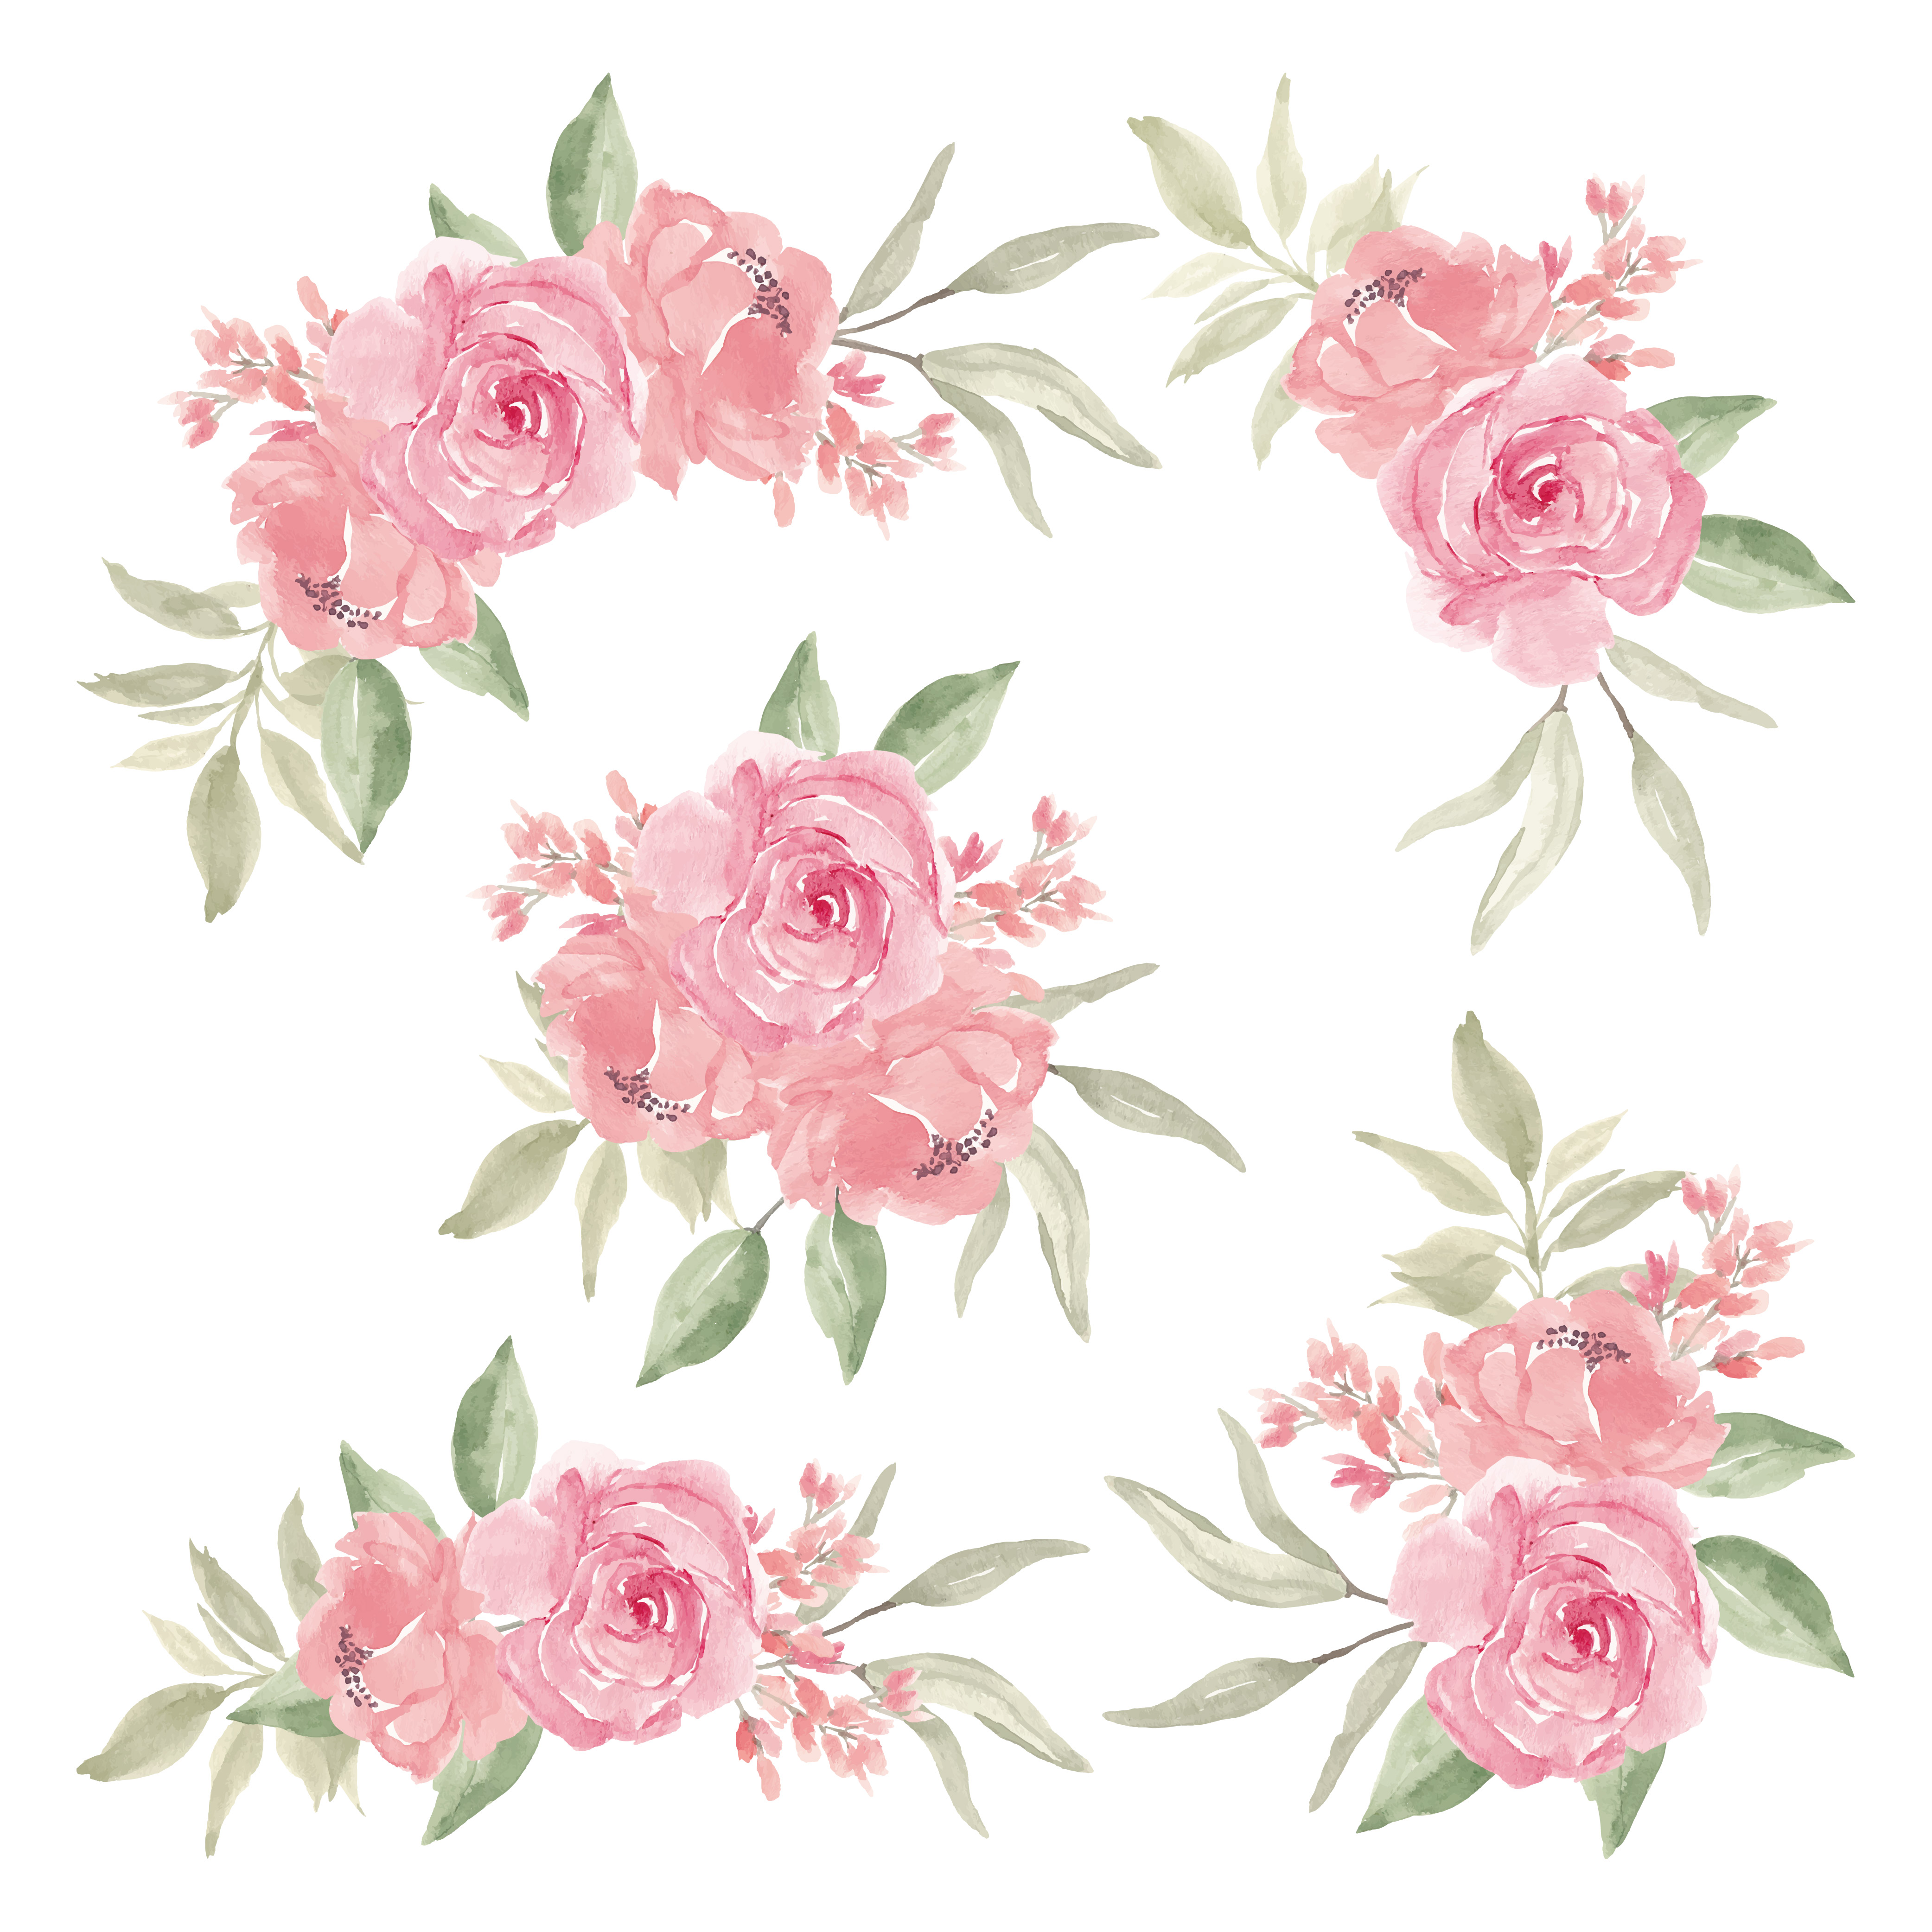 Download Watercolor Pink Flower Bouquet Set - Download Free Vectors ...